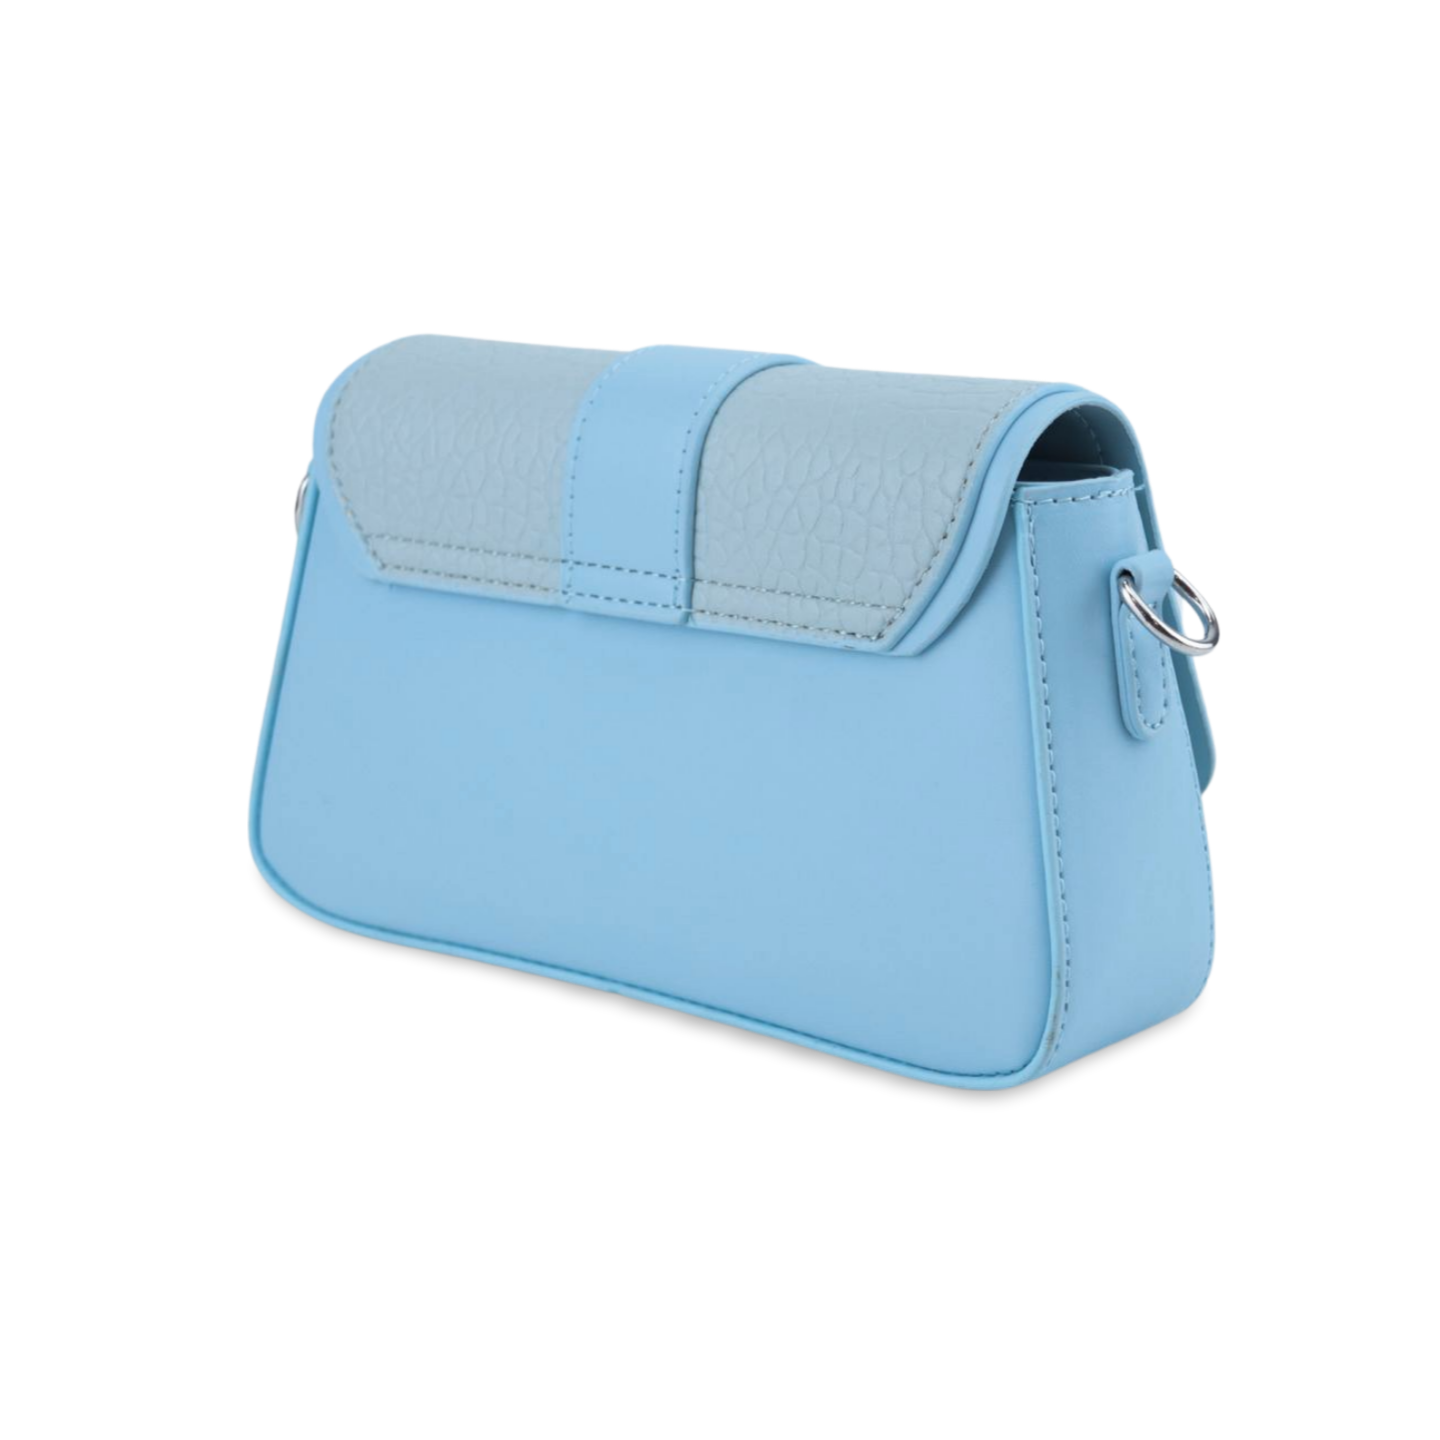 Sleek and Stylish Crossbody Bag for Everyday Use